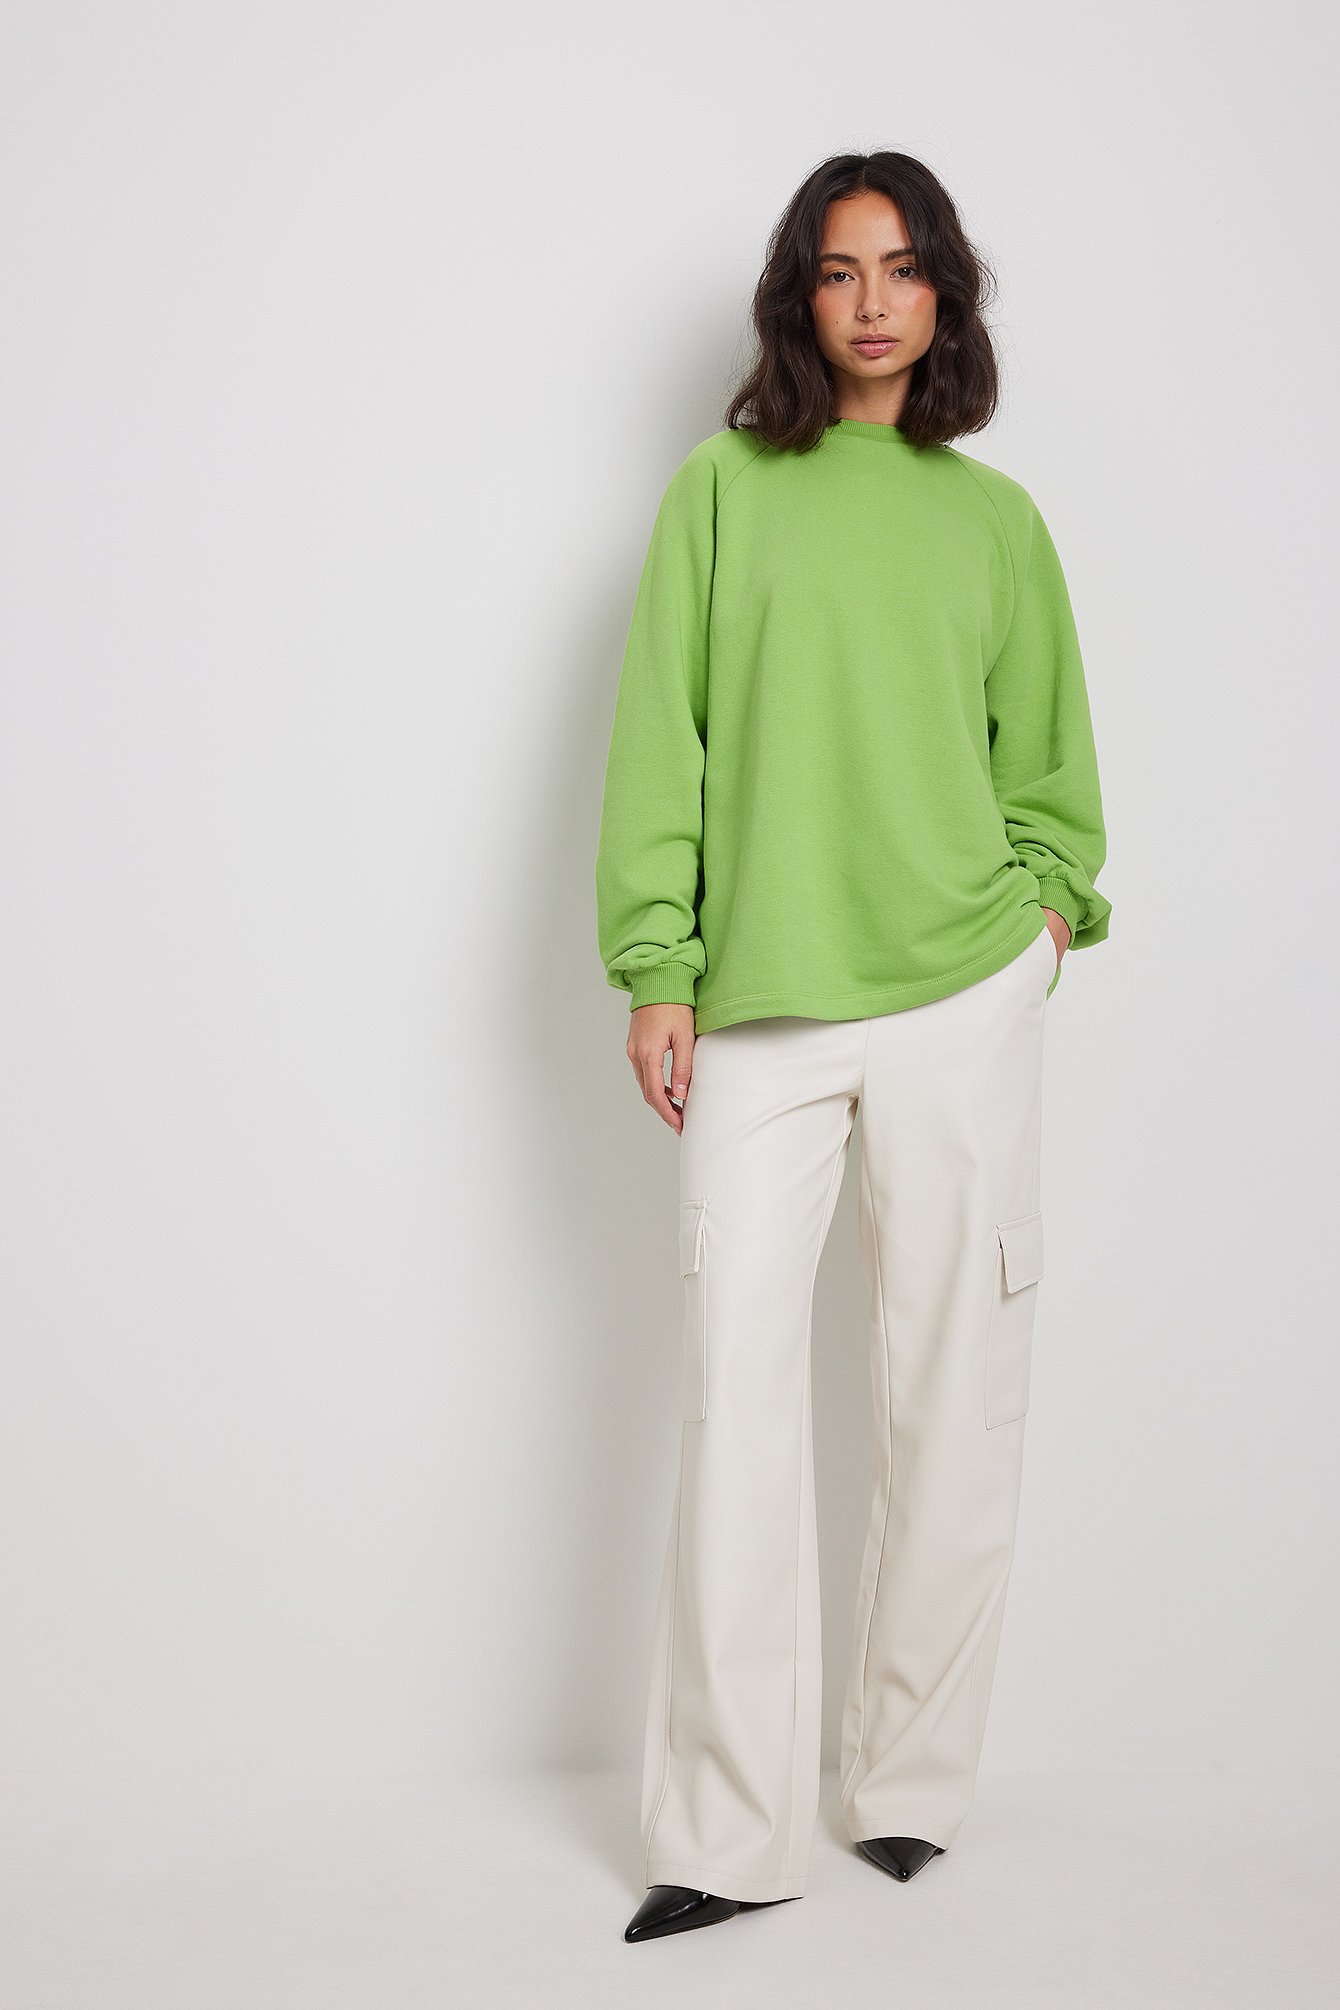 Langer Basic-Pullover Grün | NA-KD | Strickpullover